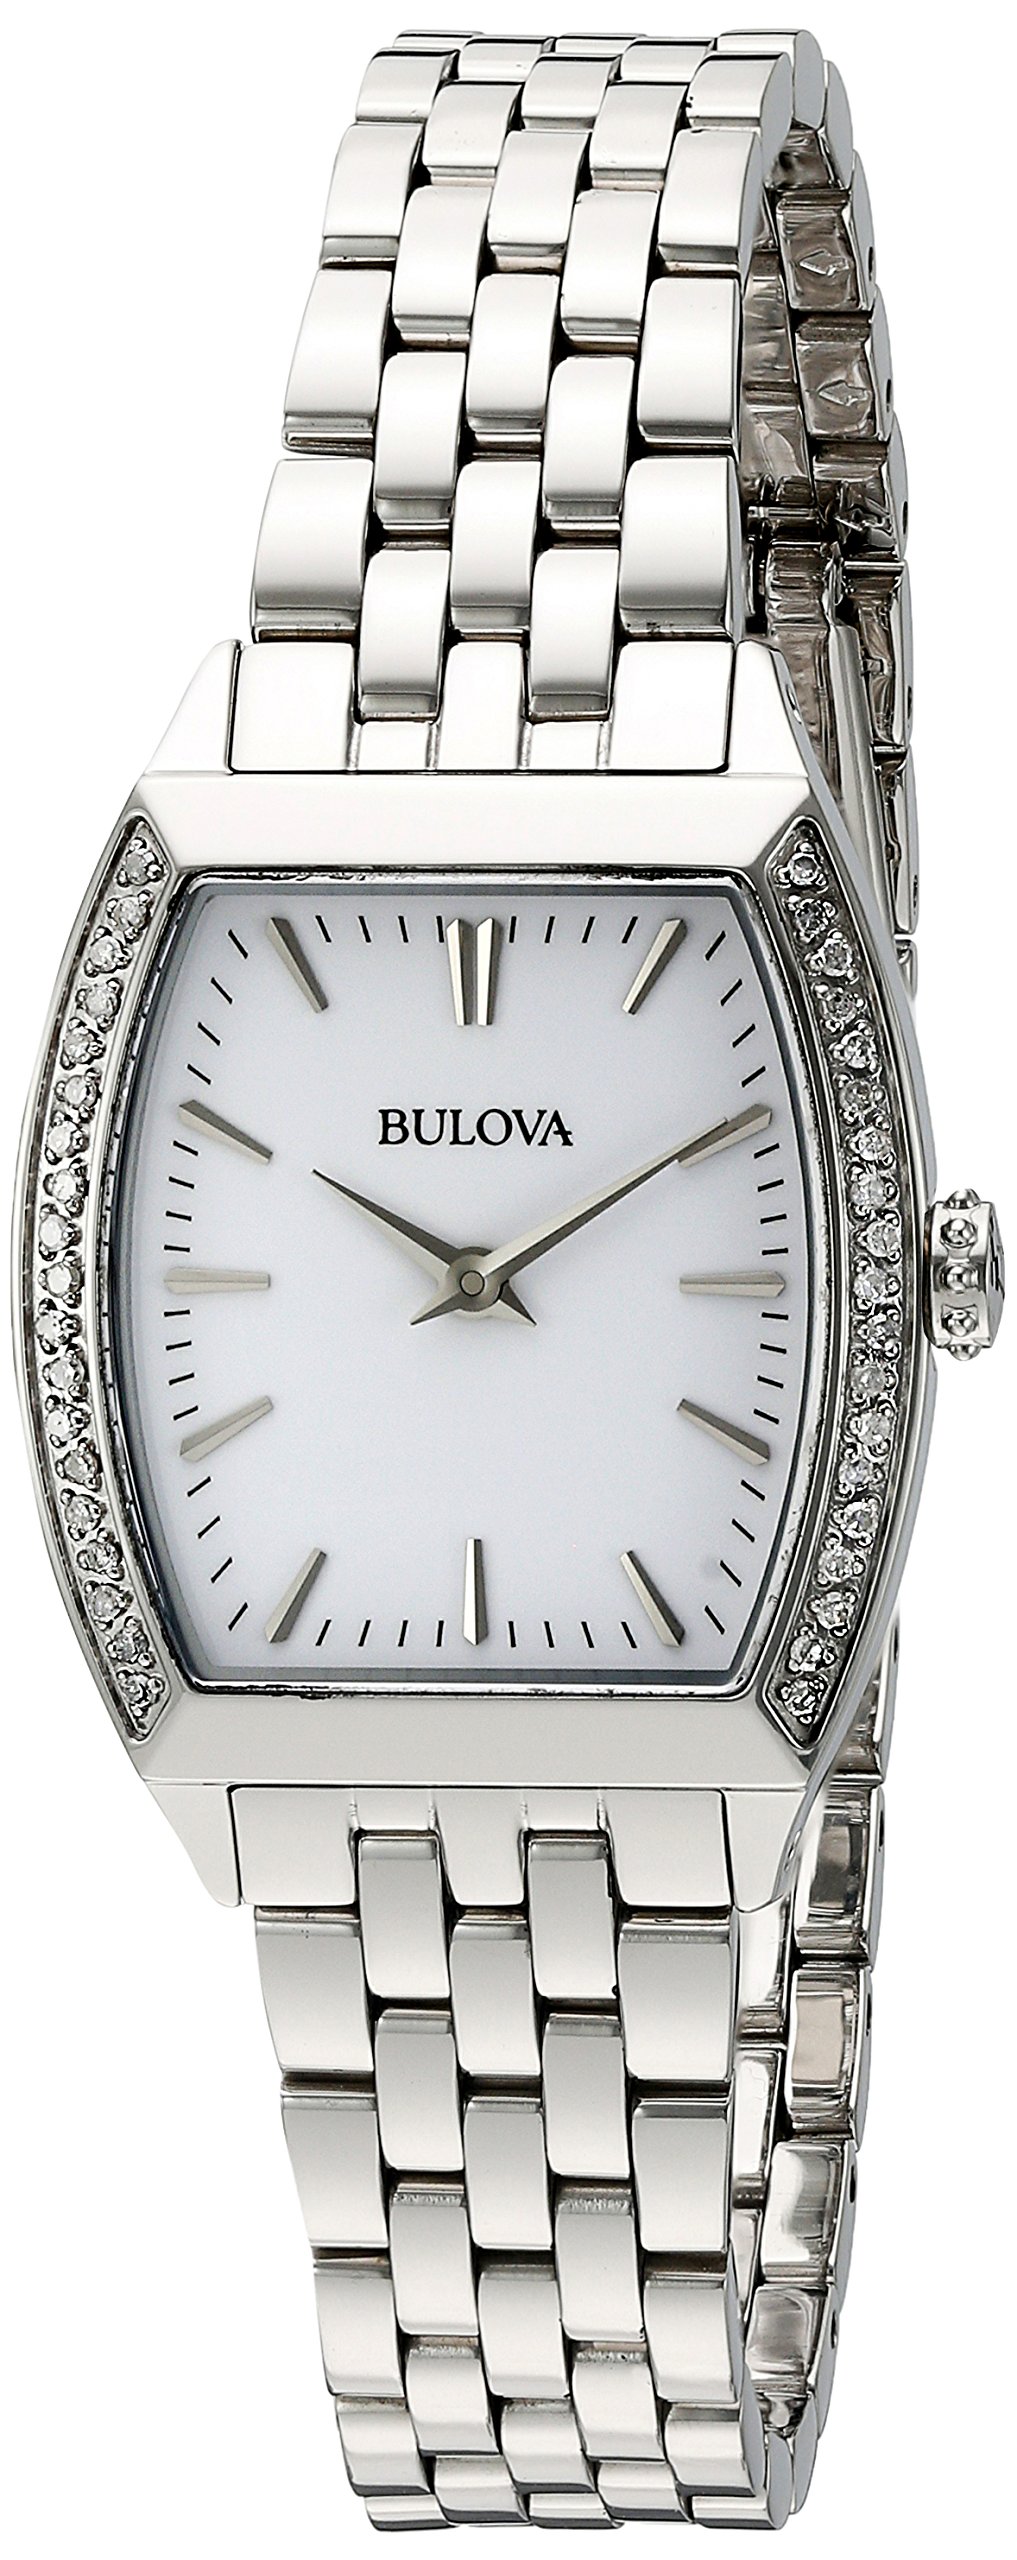 Bulova Women's 96R196 Analog Display Japanese Quartz Watch